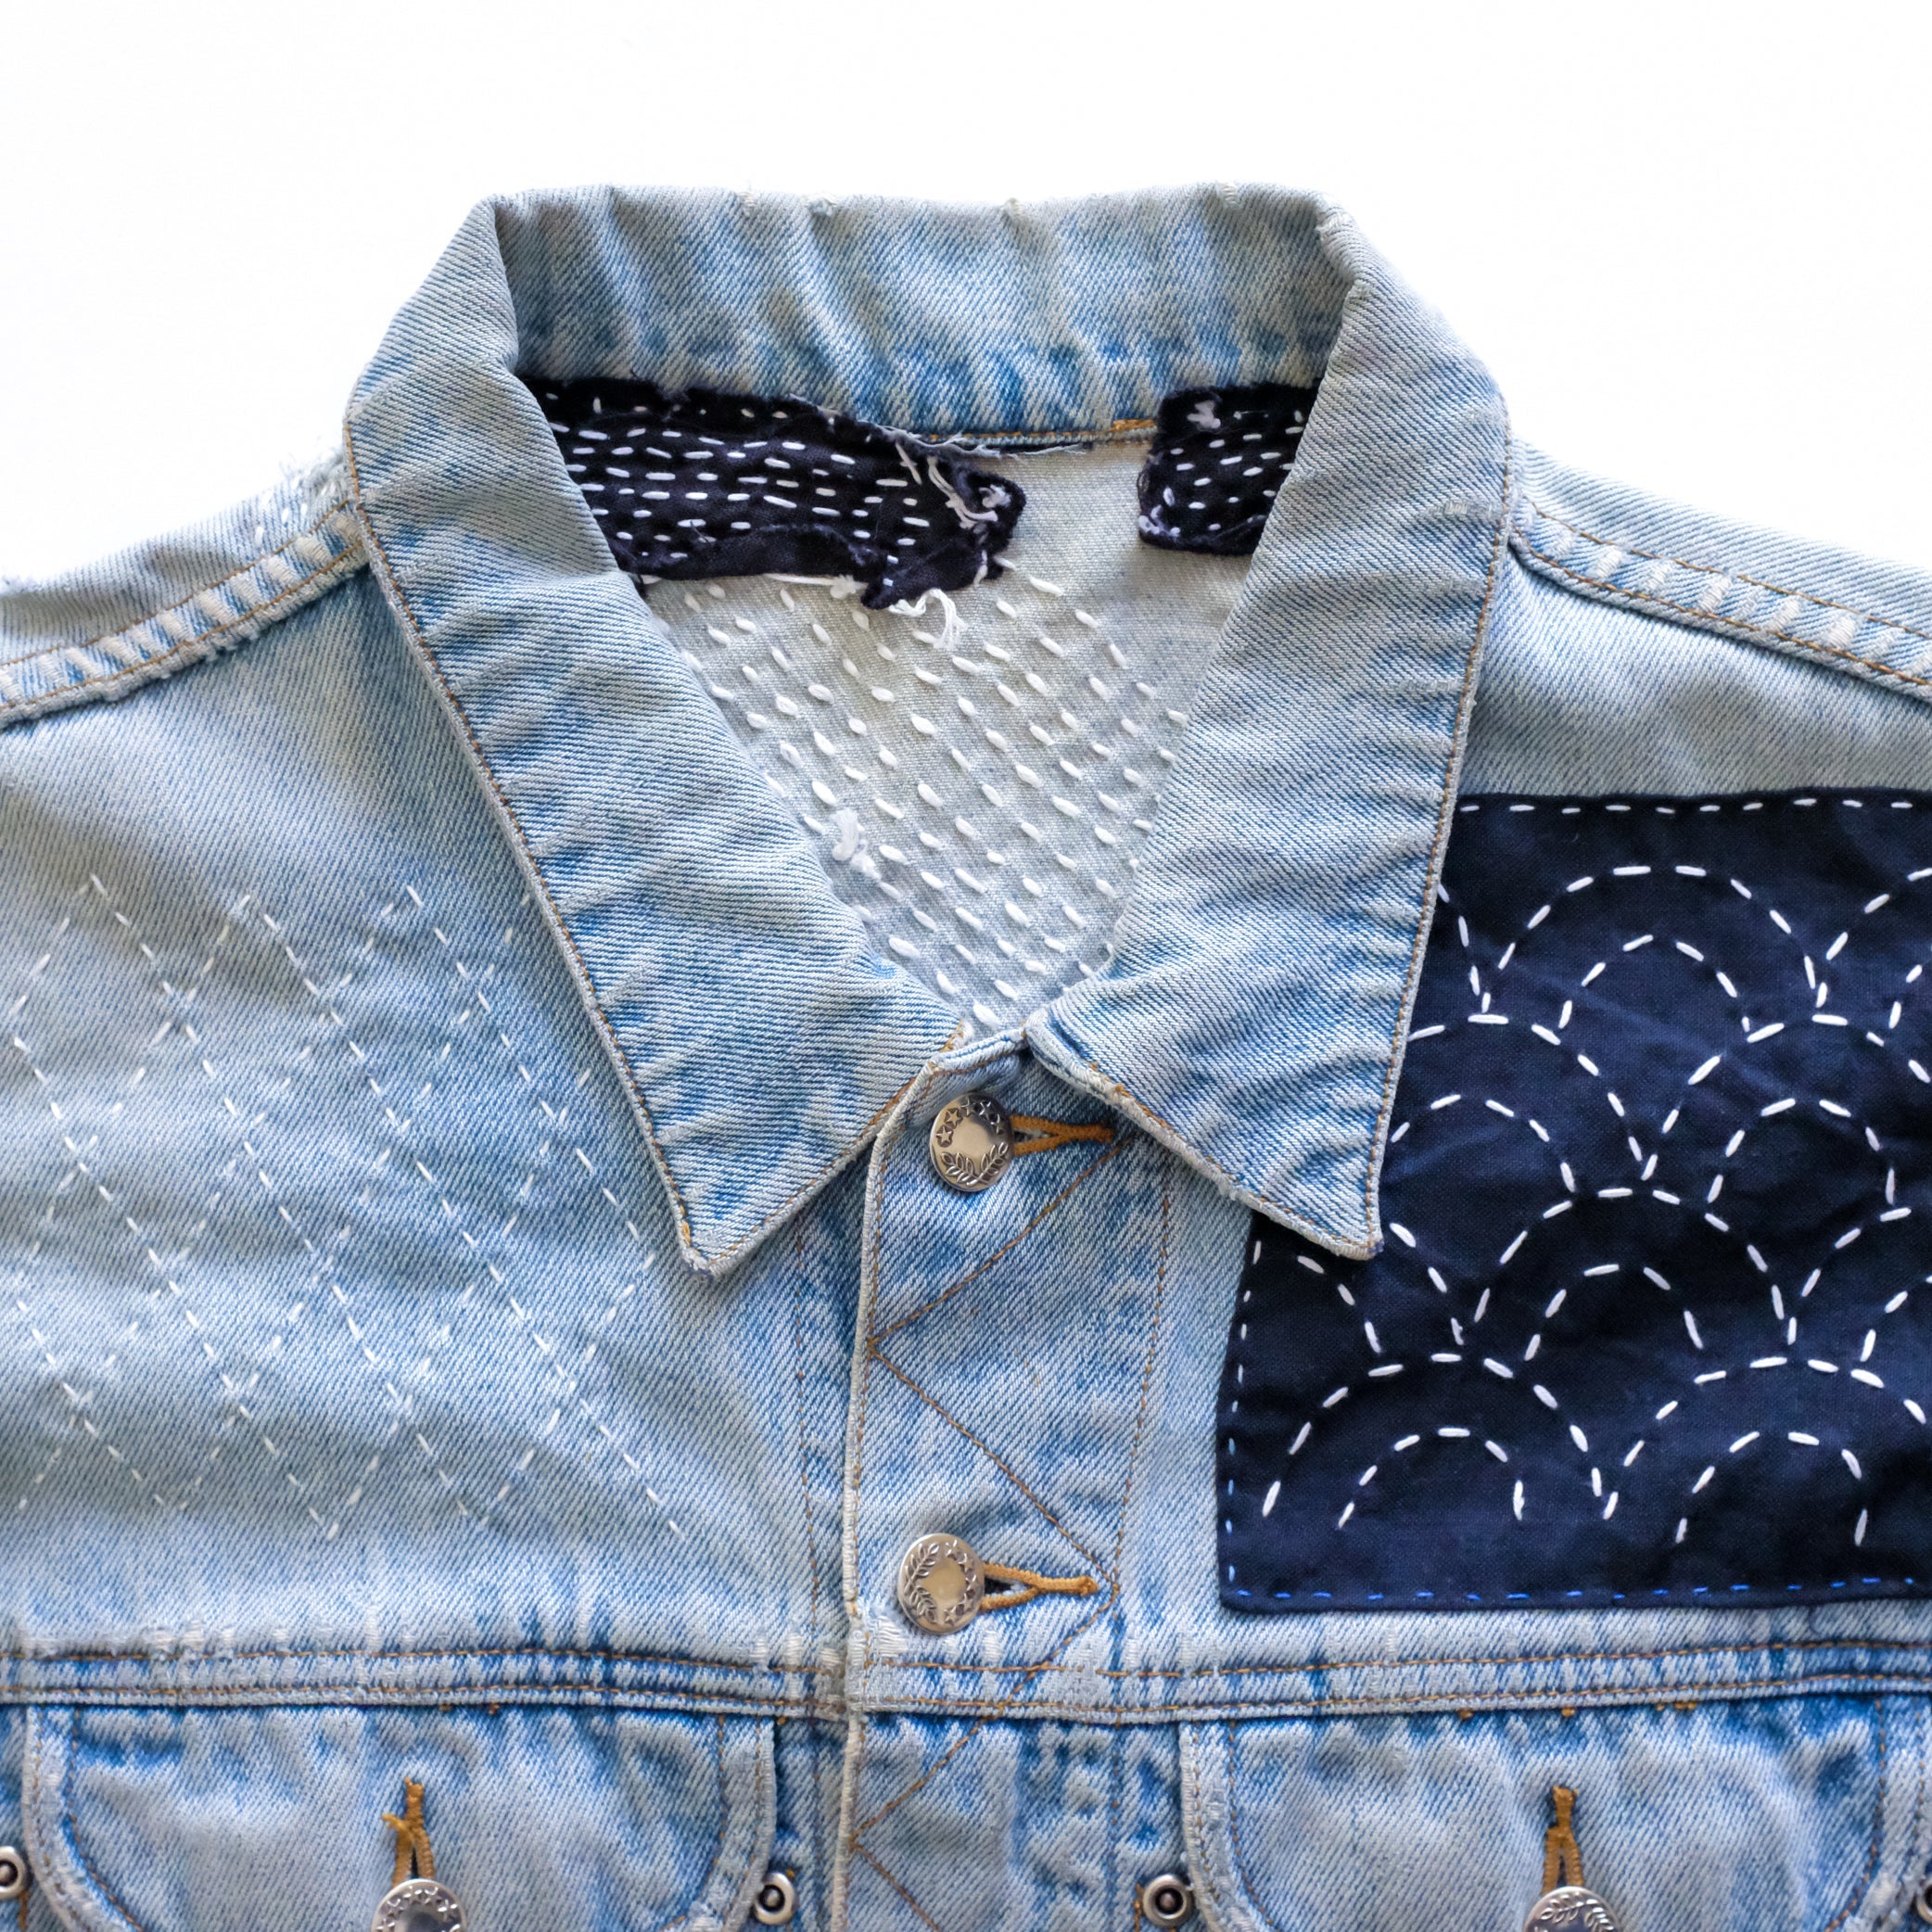 DIY Denim Jacket with Embroidery - Cutesy Crafts